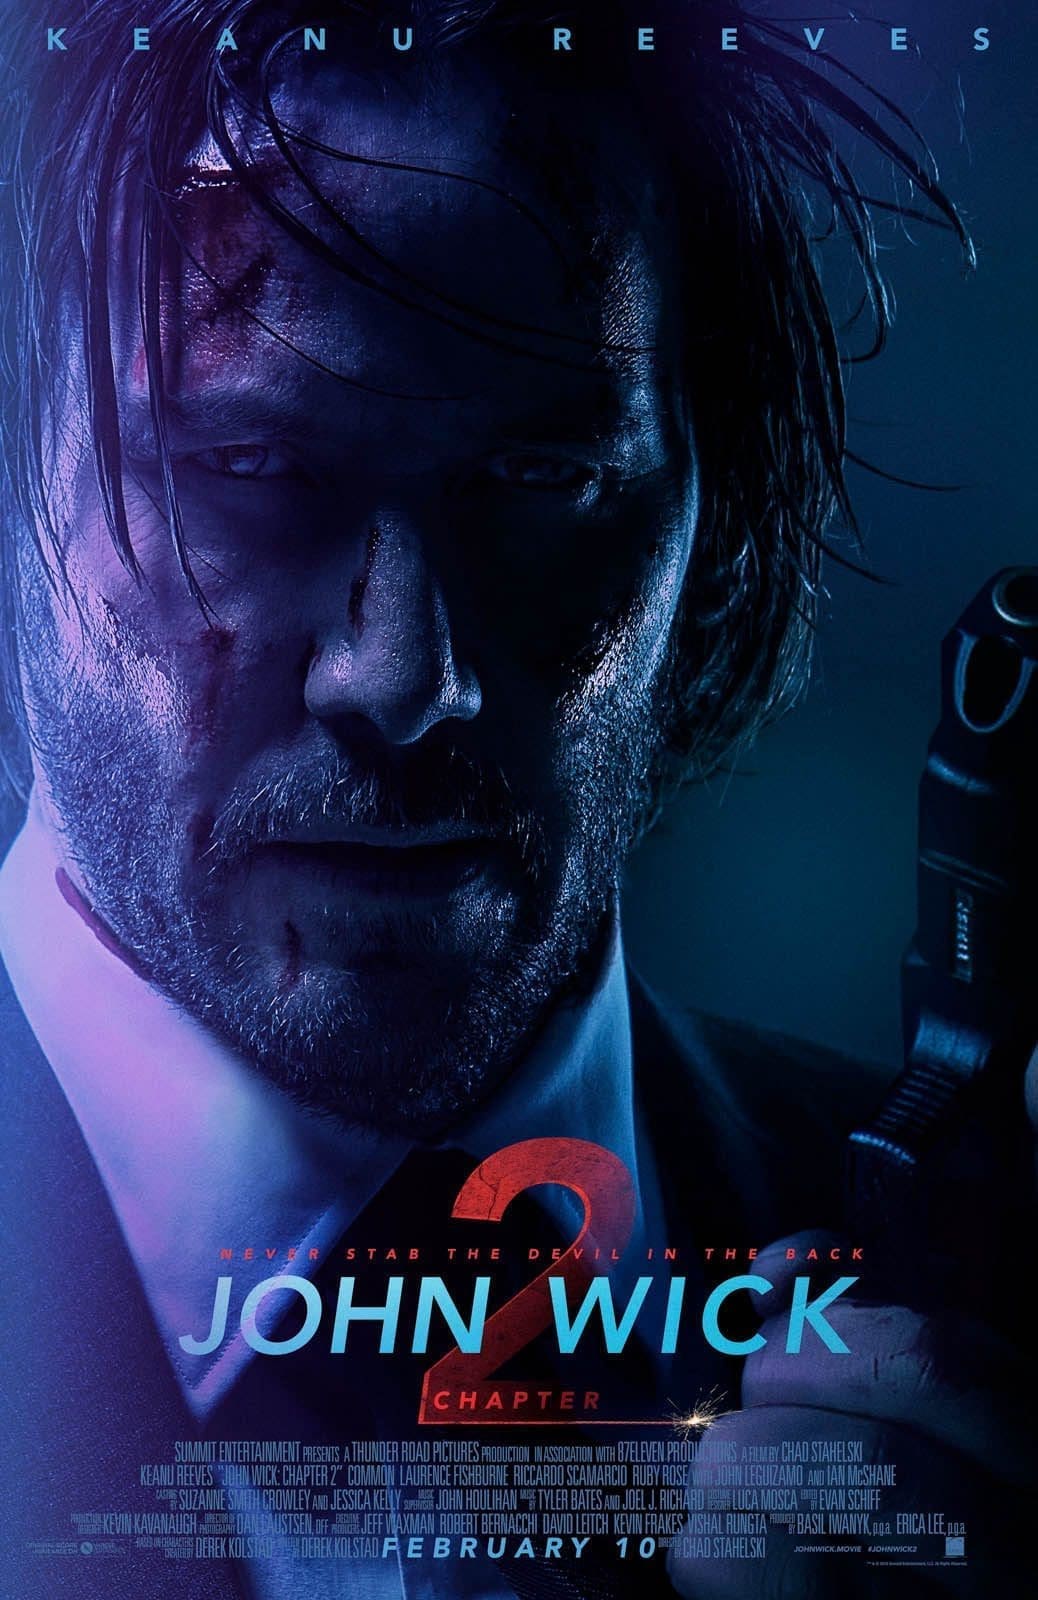 John Wick 2, keanu reeves, Lionsgate, movie news, poster, trailer